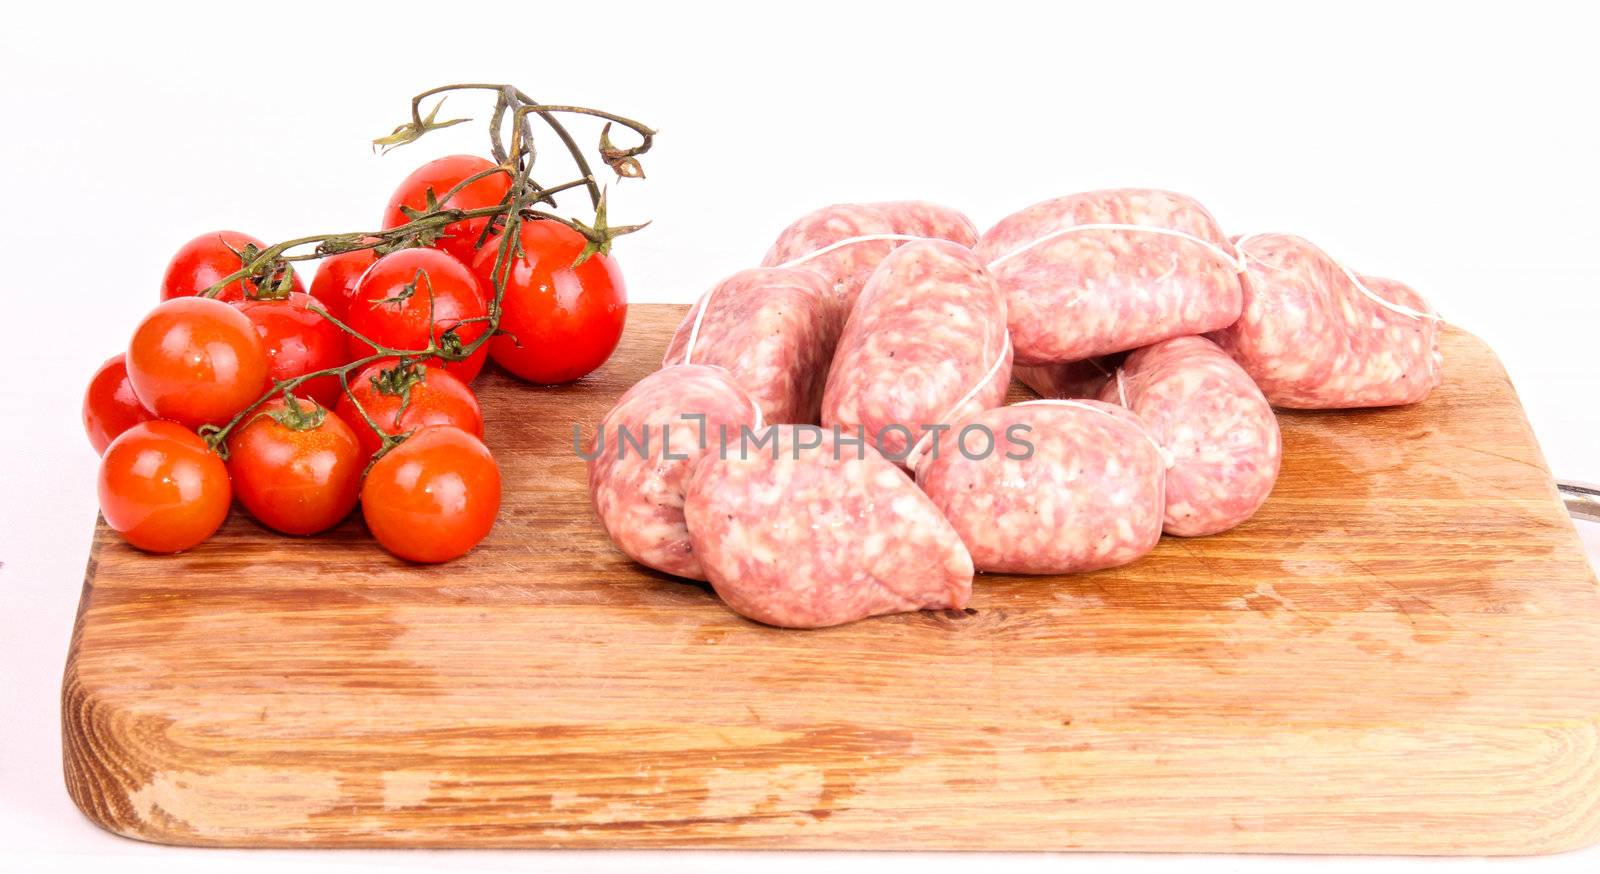 sausages by danilobiancalana